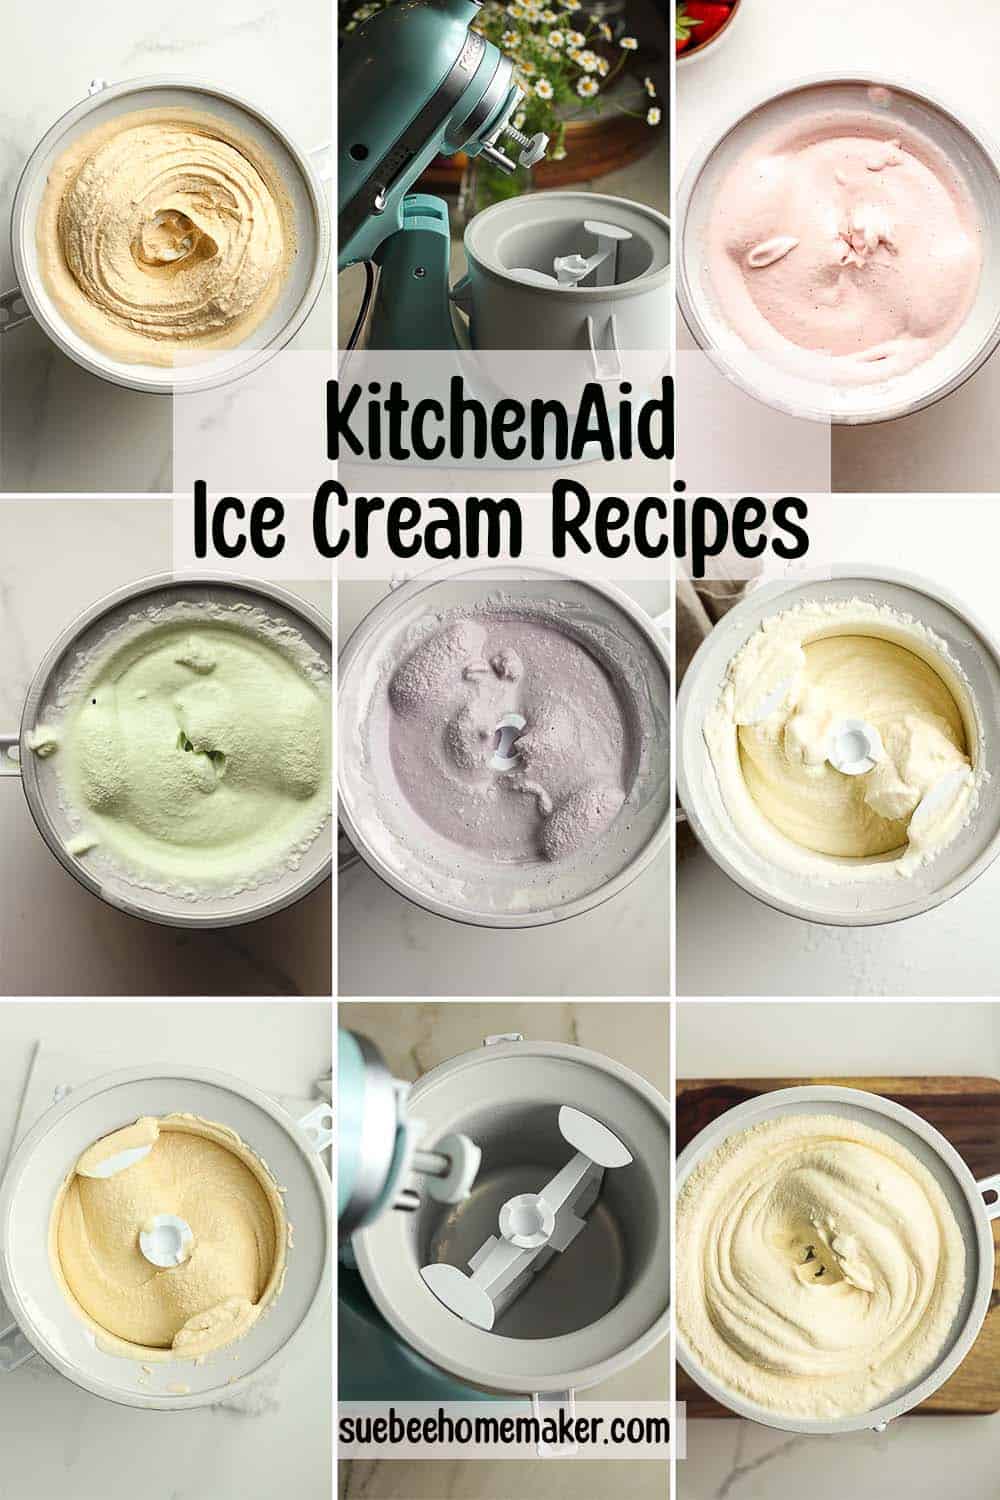 https://suebeehomemaker.com/wp-content/uploads/2023/02/KitchenAid-Ice-Cream-Recipes-pin.jpg